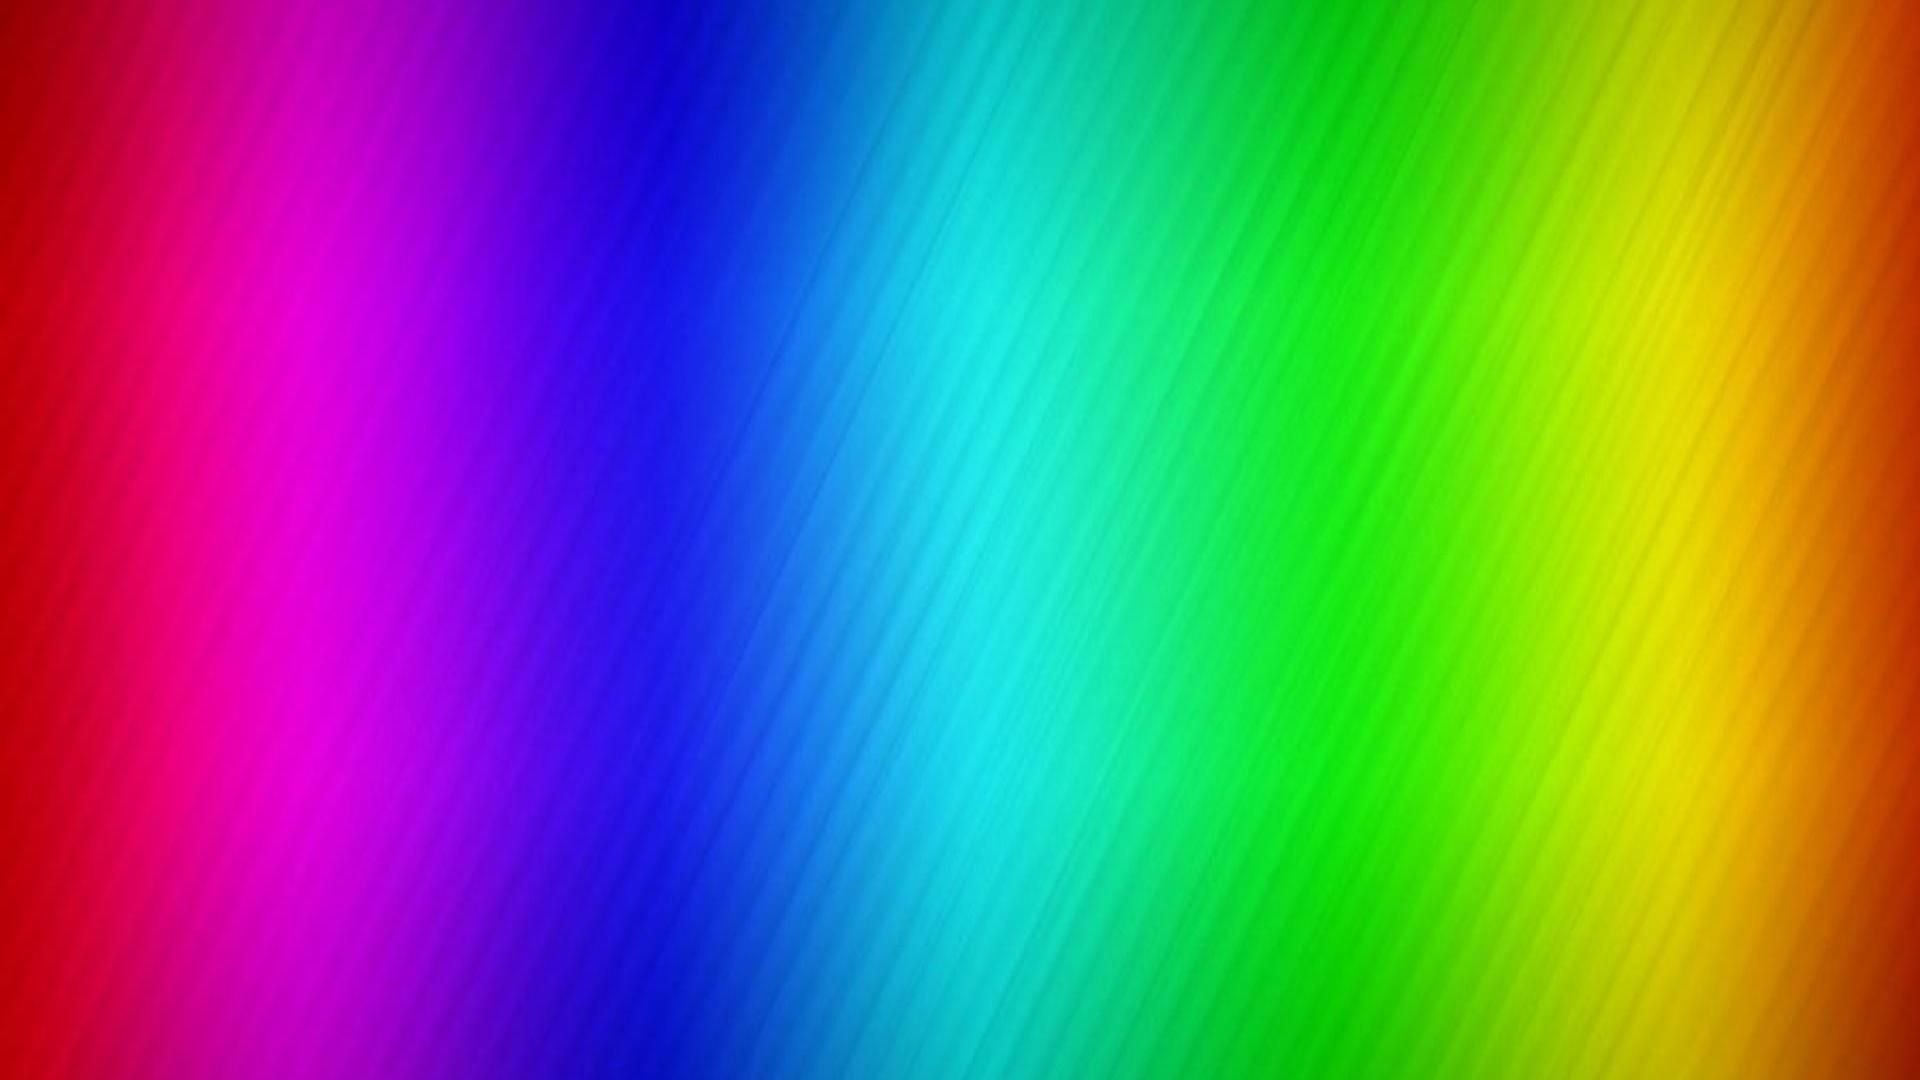 Rainbow 1080p Background Picture Image